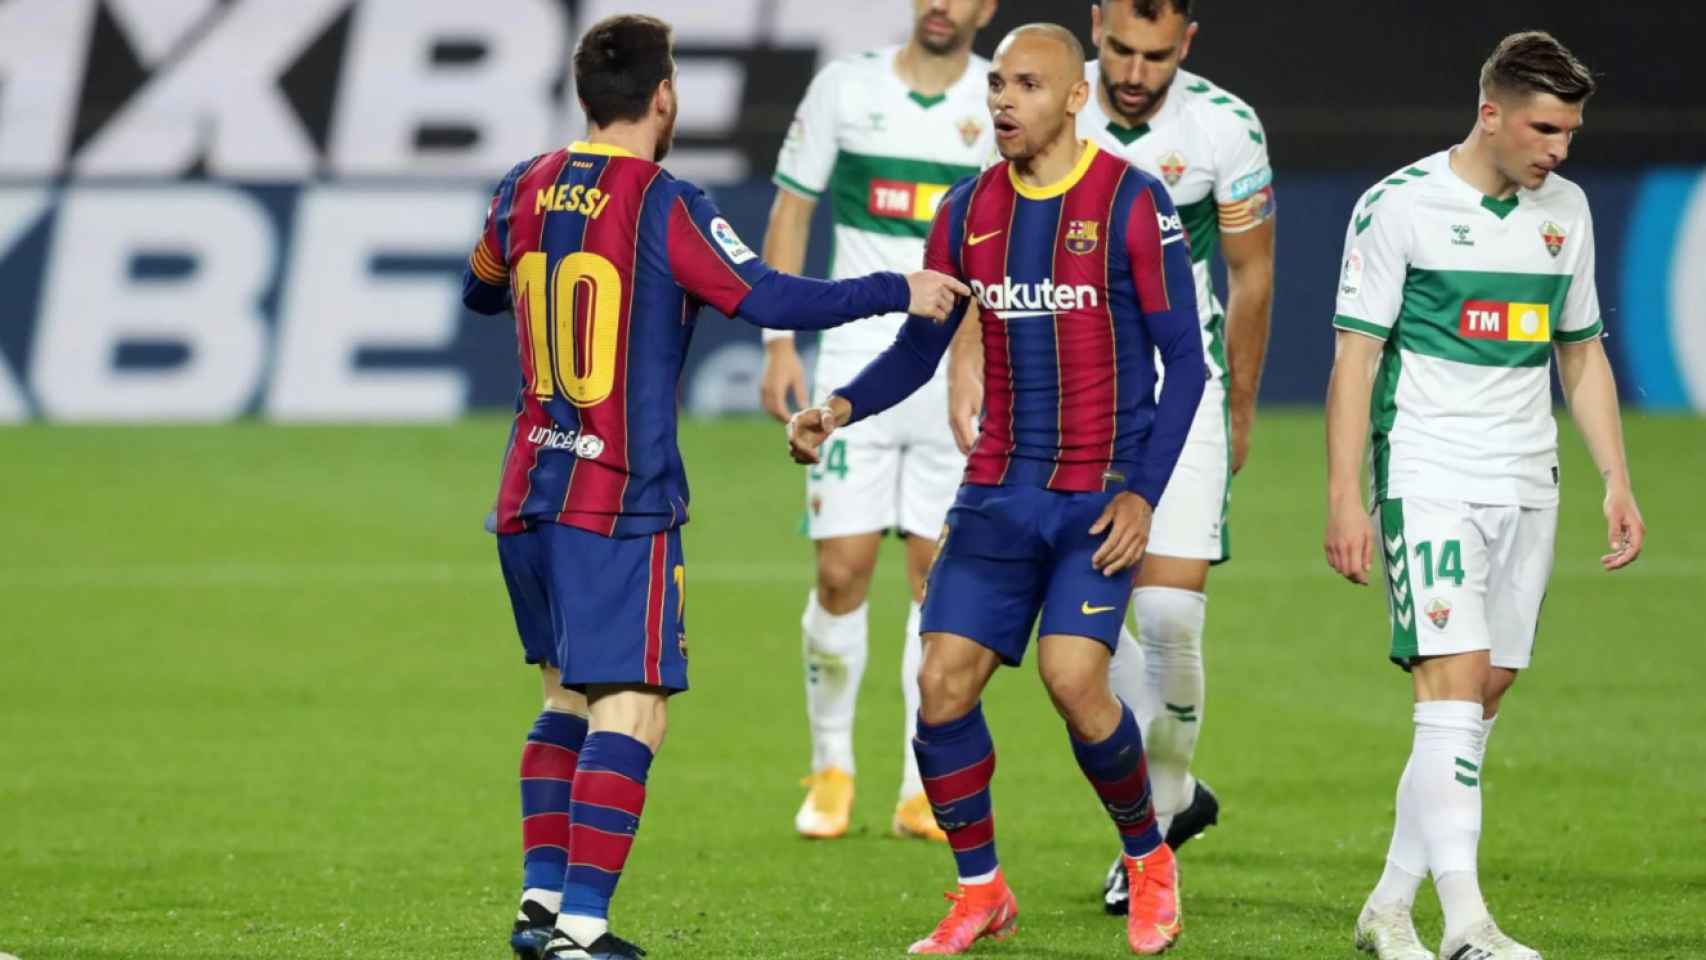 Messi y Braithwaite celebrando el primer gol del argentino / FC Barcelona